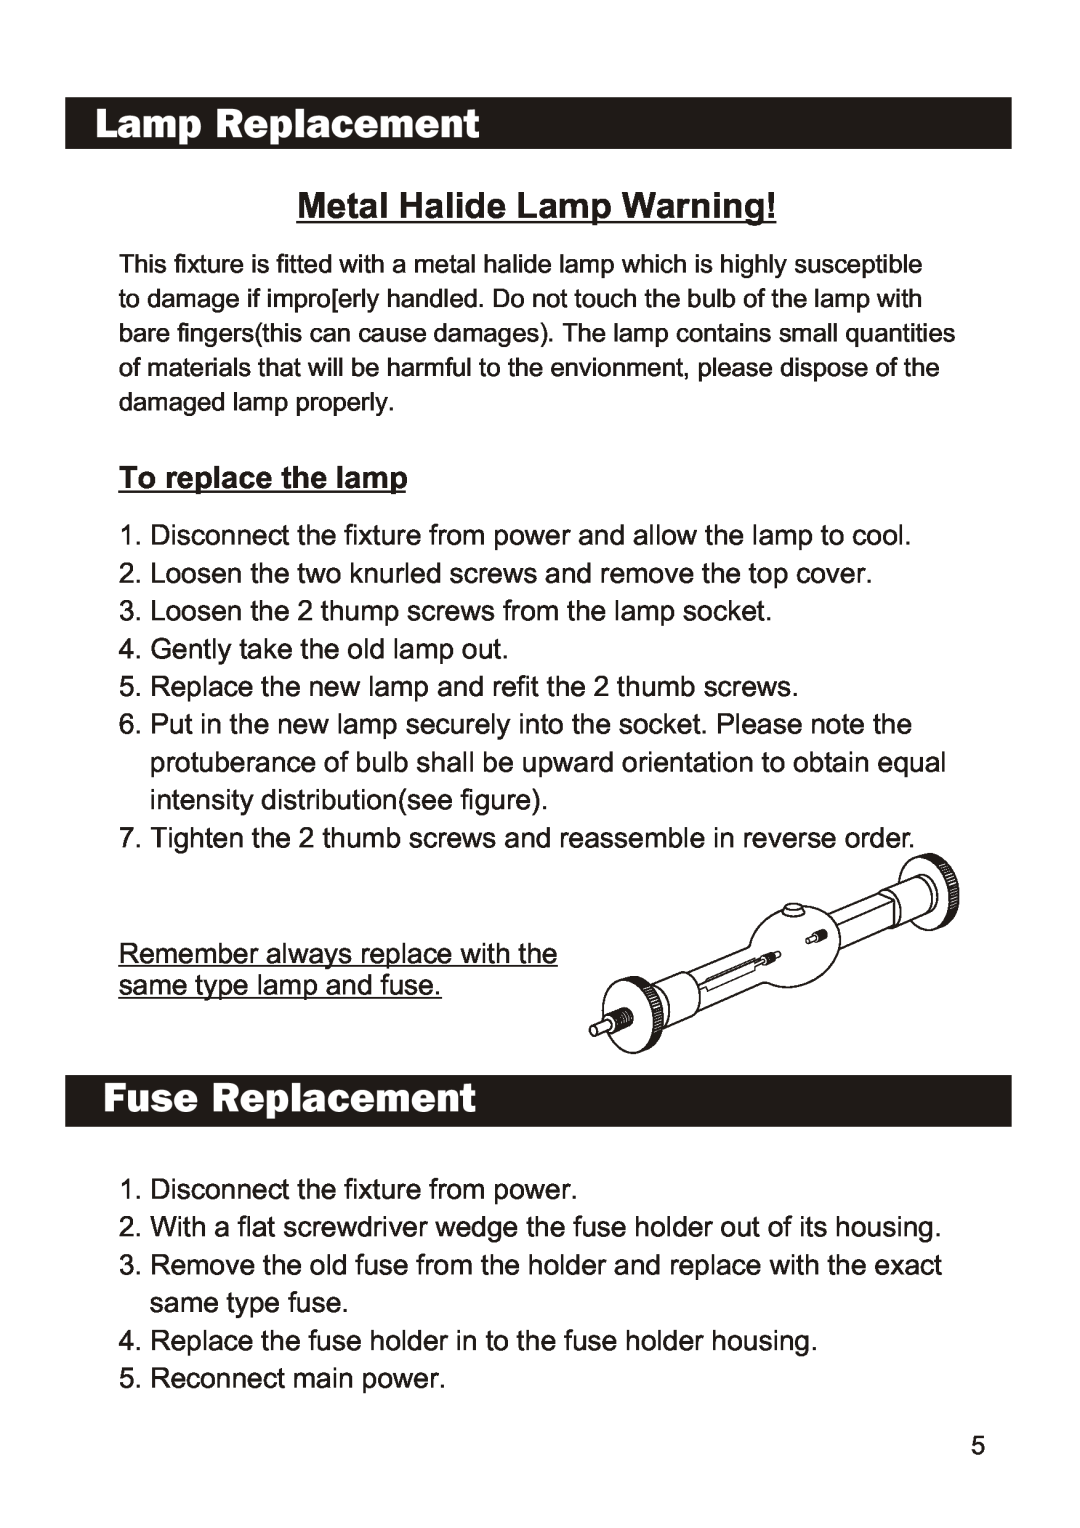 Elation Professional 300 manual Lamp Replacement, Fuse Replacement, Metal Halide Lamp Warning, To replace the lamp 